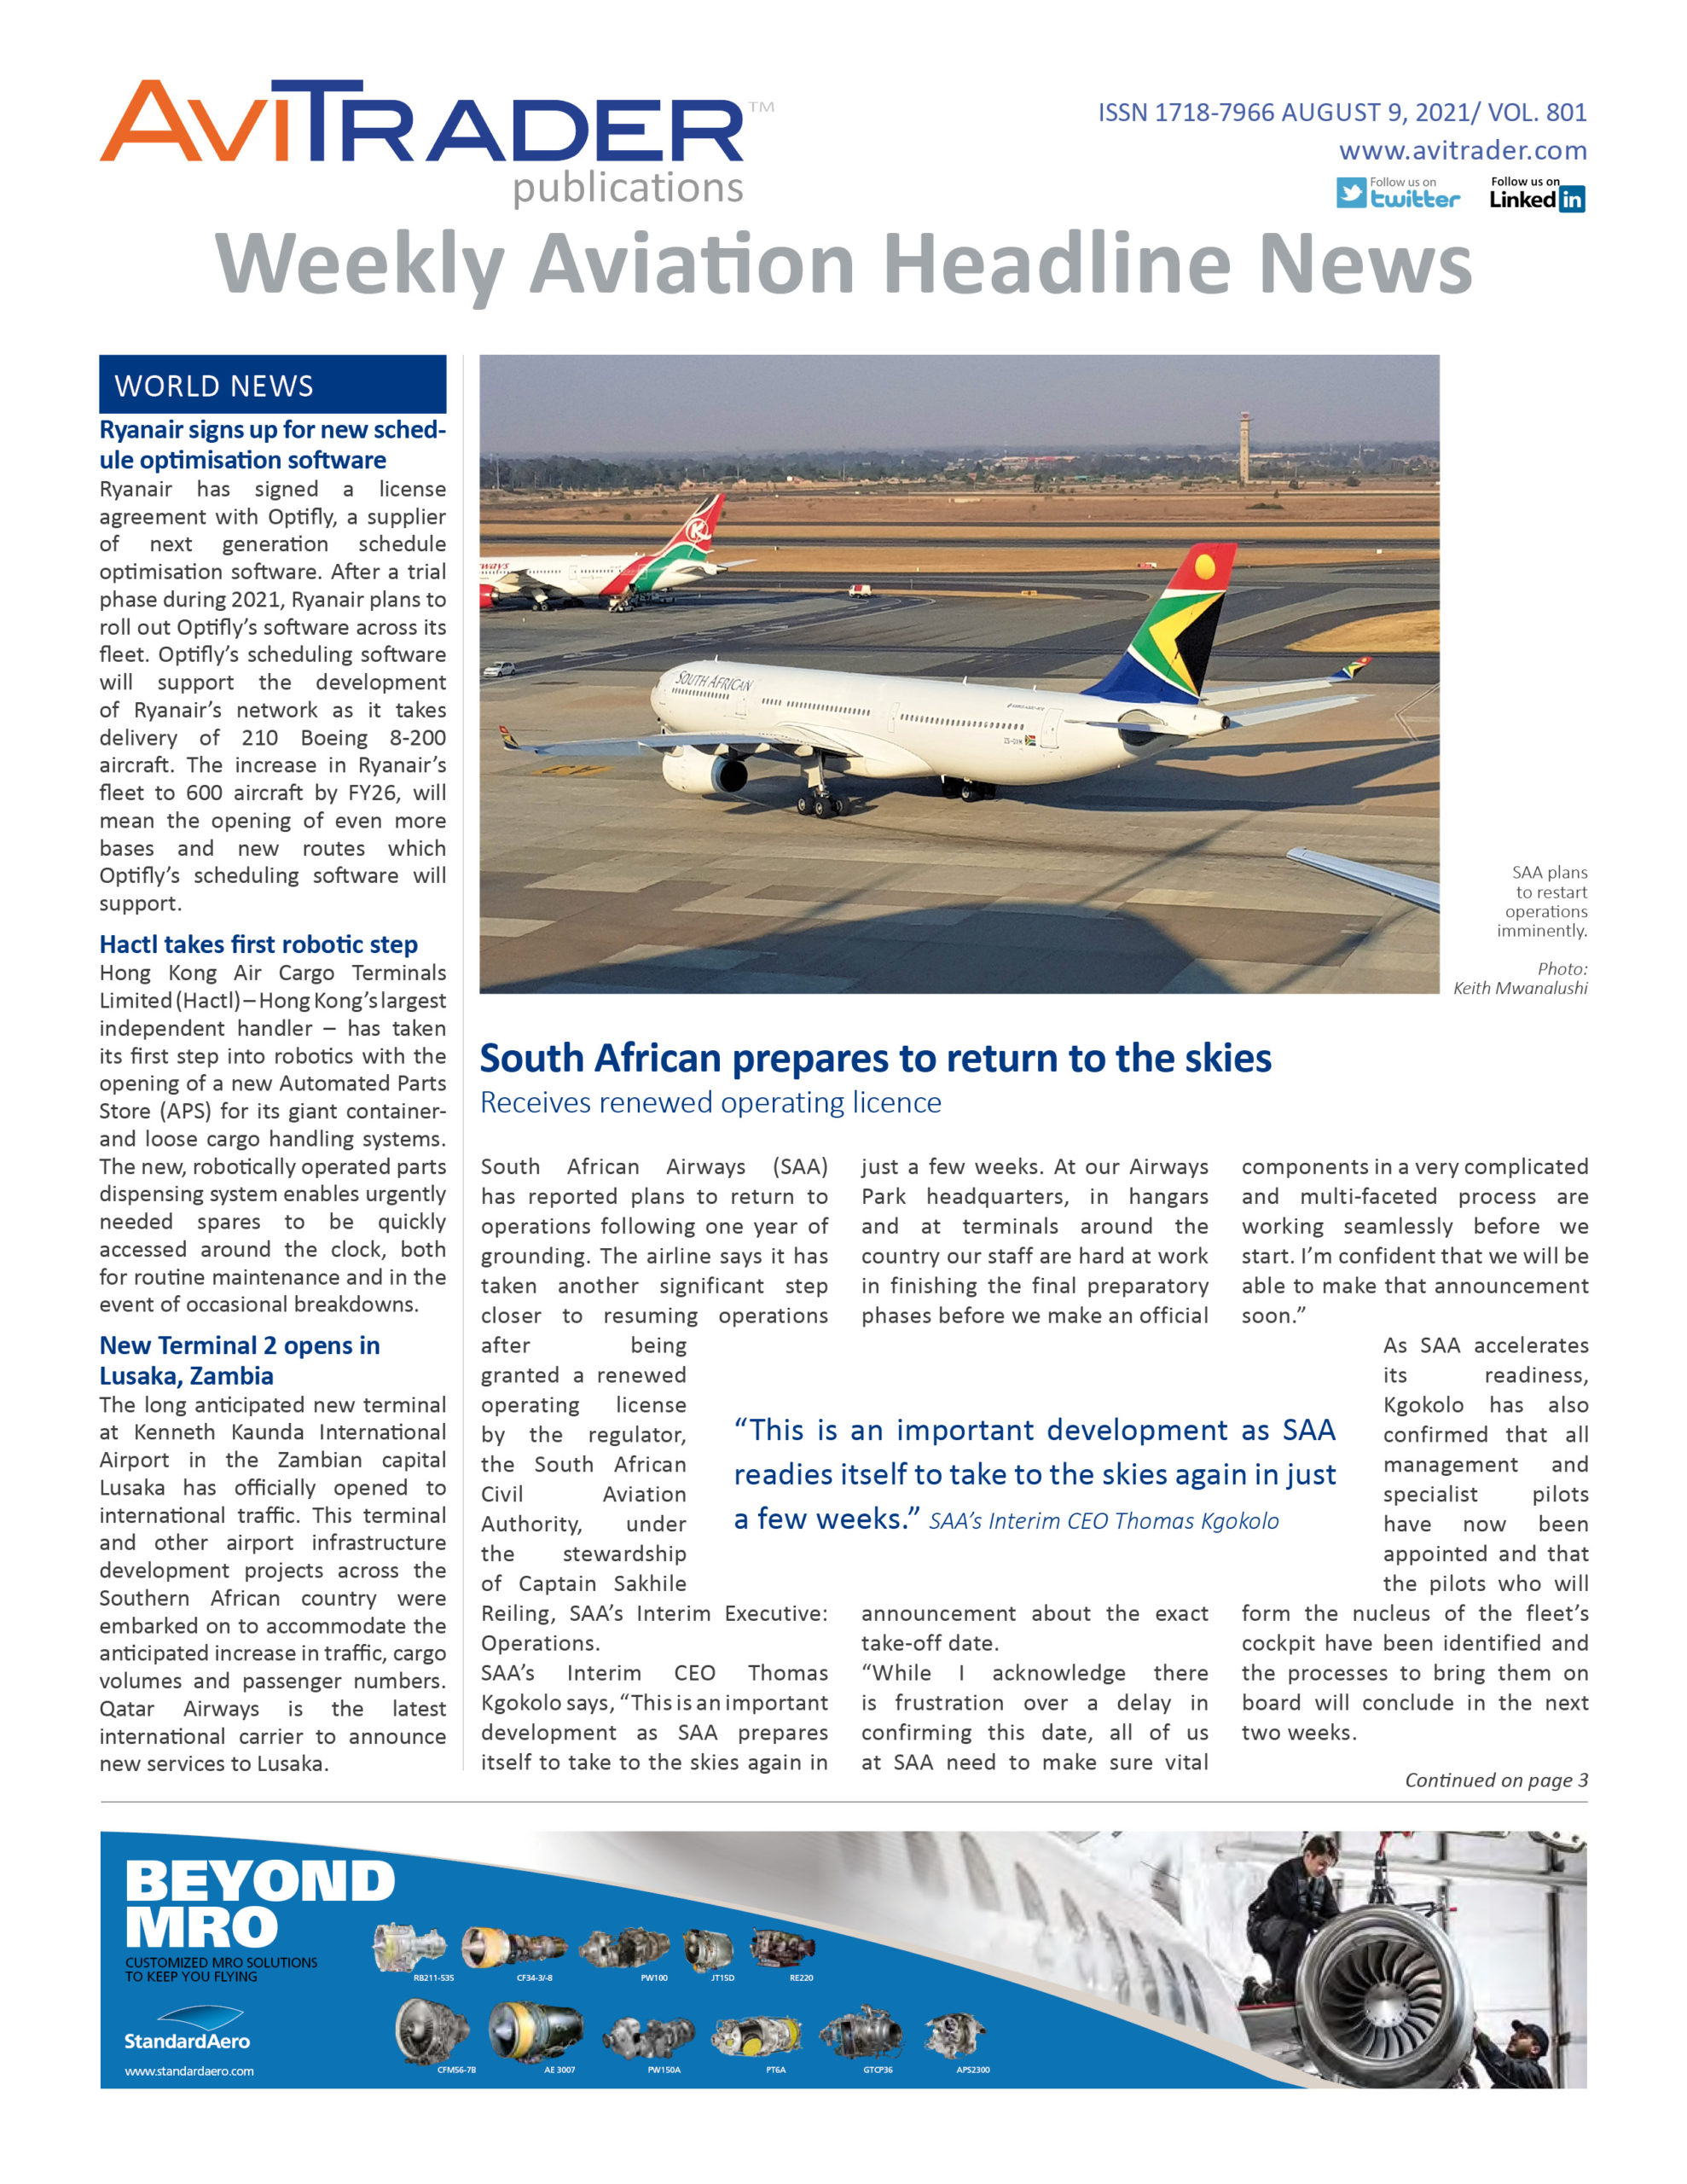 AviTrader_Weekly_Headline_News_Cover_2021-08-09